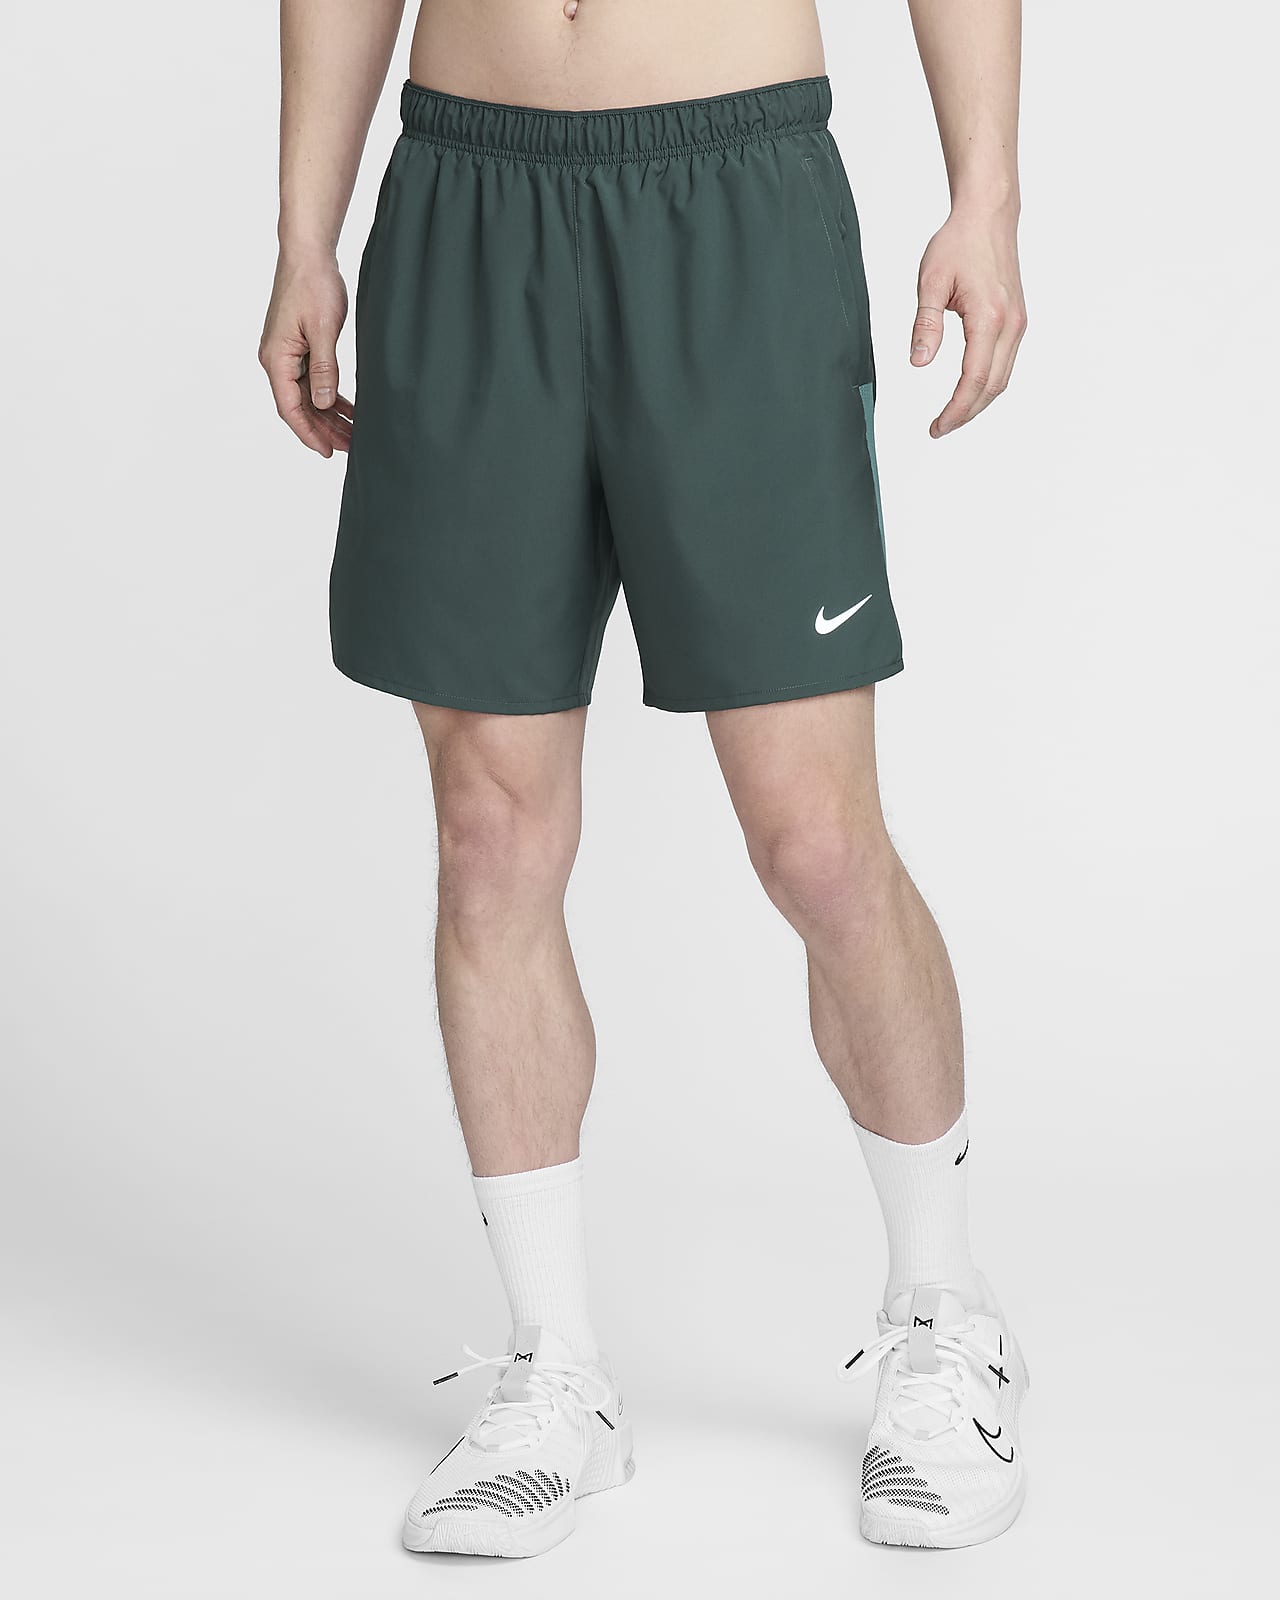 Buy Nike Dri-FIT Challenger Men's 7 (18cm approx.) Unlined